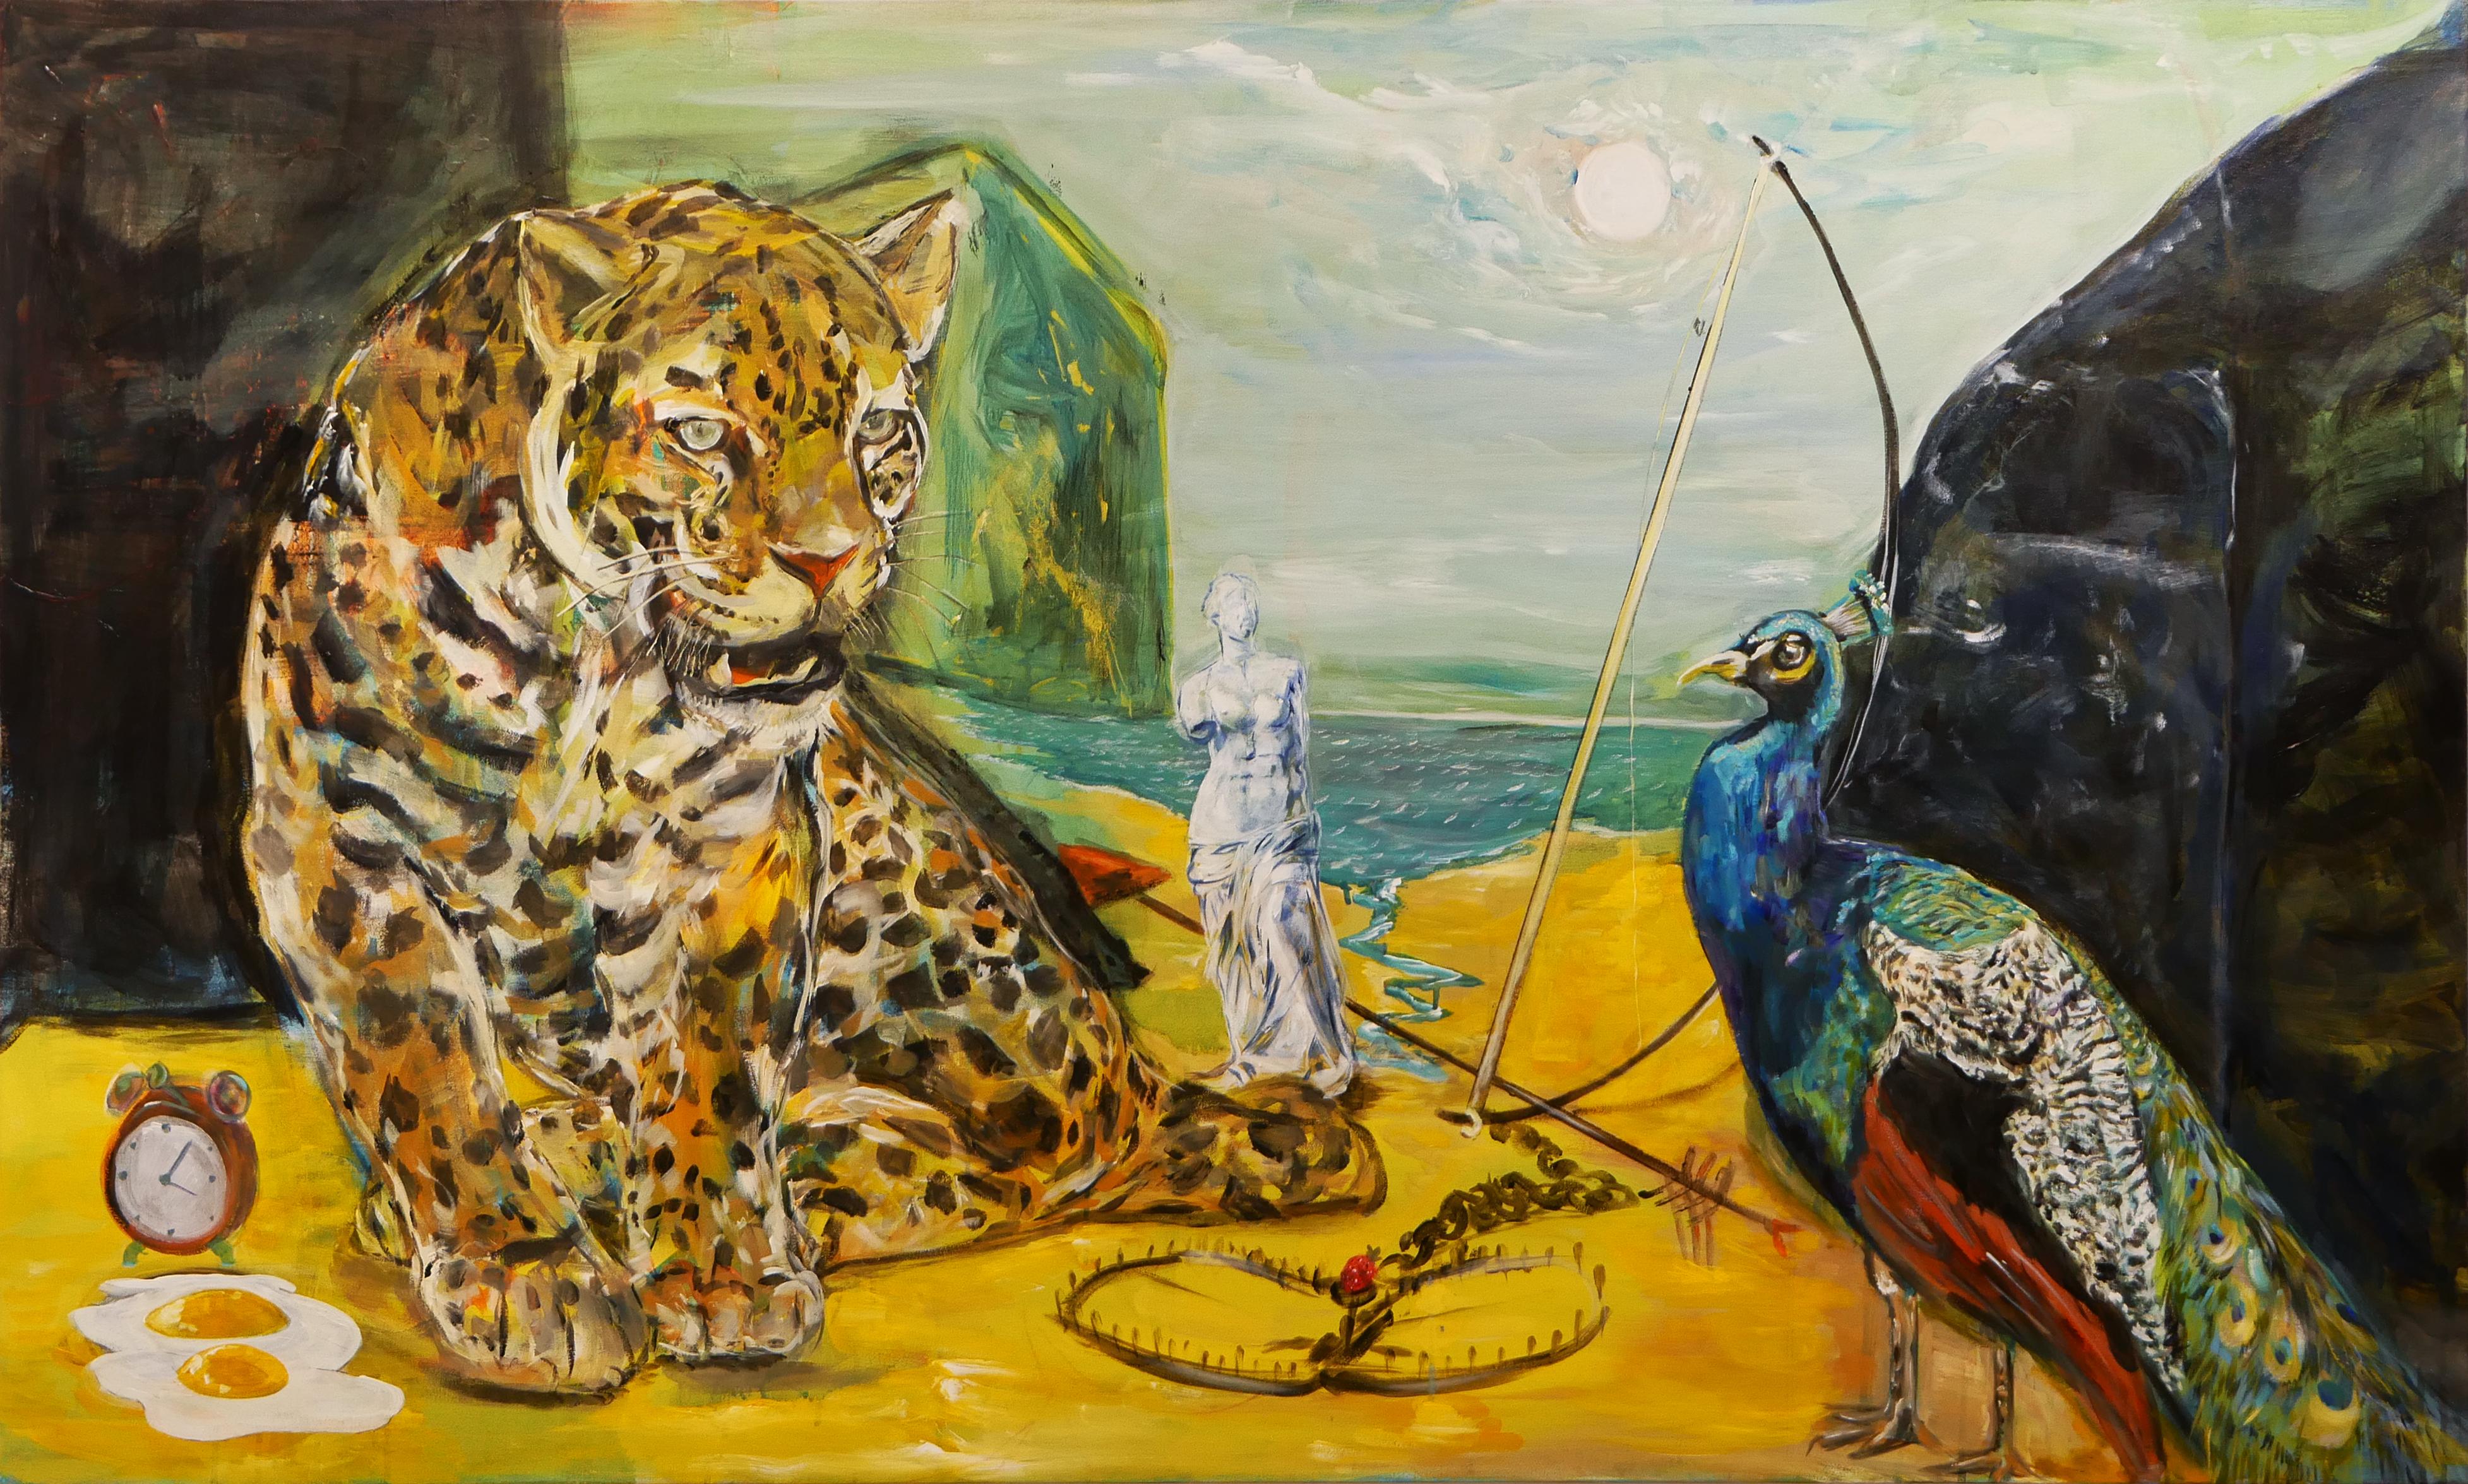 Moisés Villafuerte Animal Painting - Contemporary Surrealist Landscape Painting of a Leopard & Peacock on the Beach